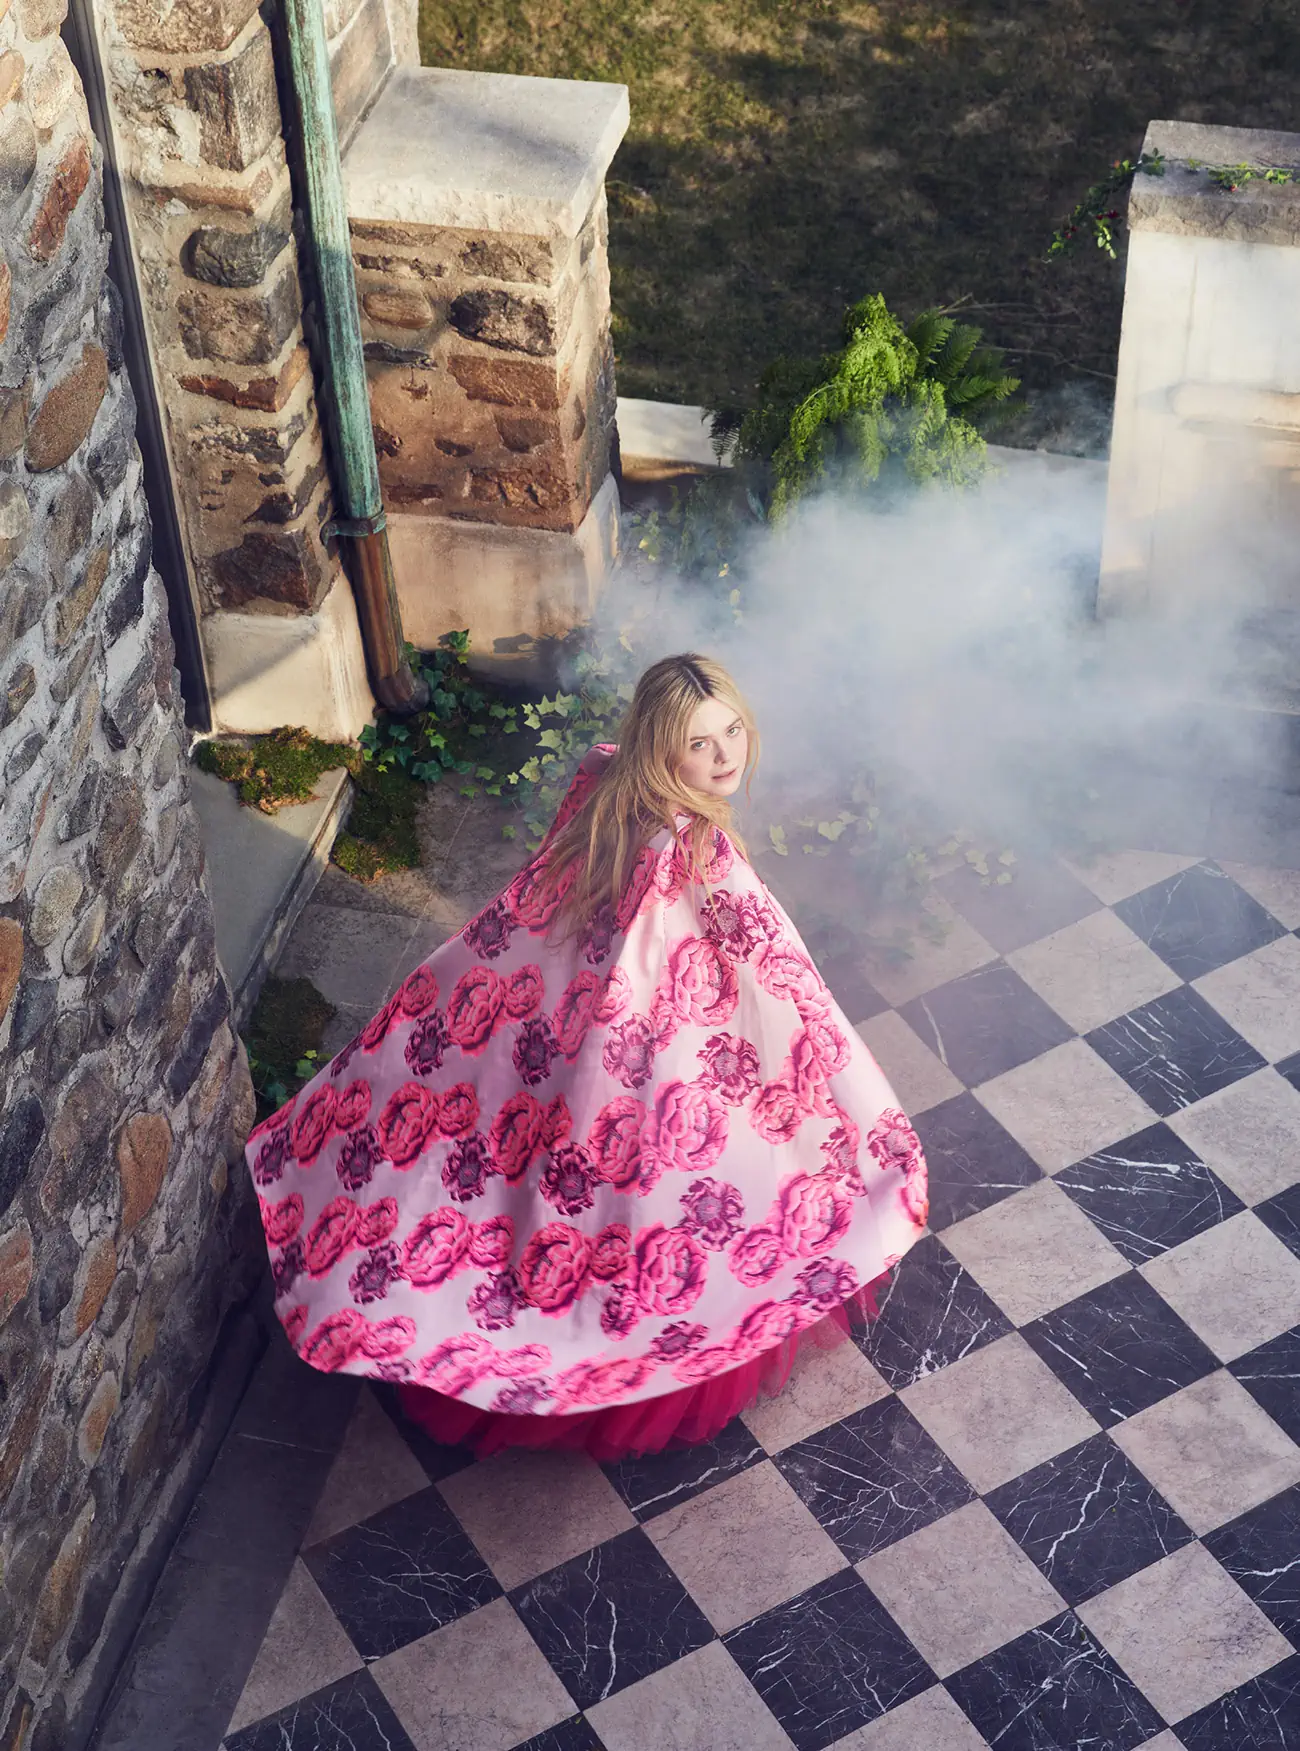 Elle Fanning covers Harper’s Bazaar UK May 2023 by Alexi Lubomirski